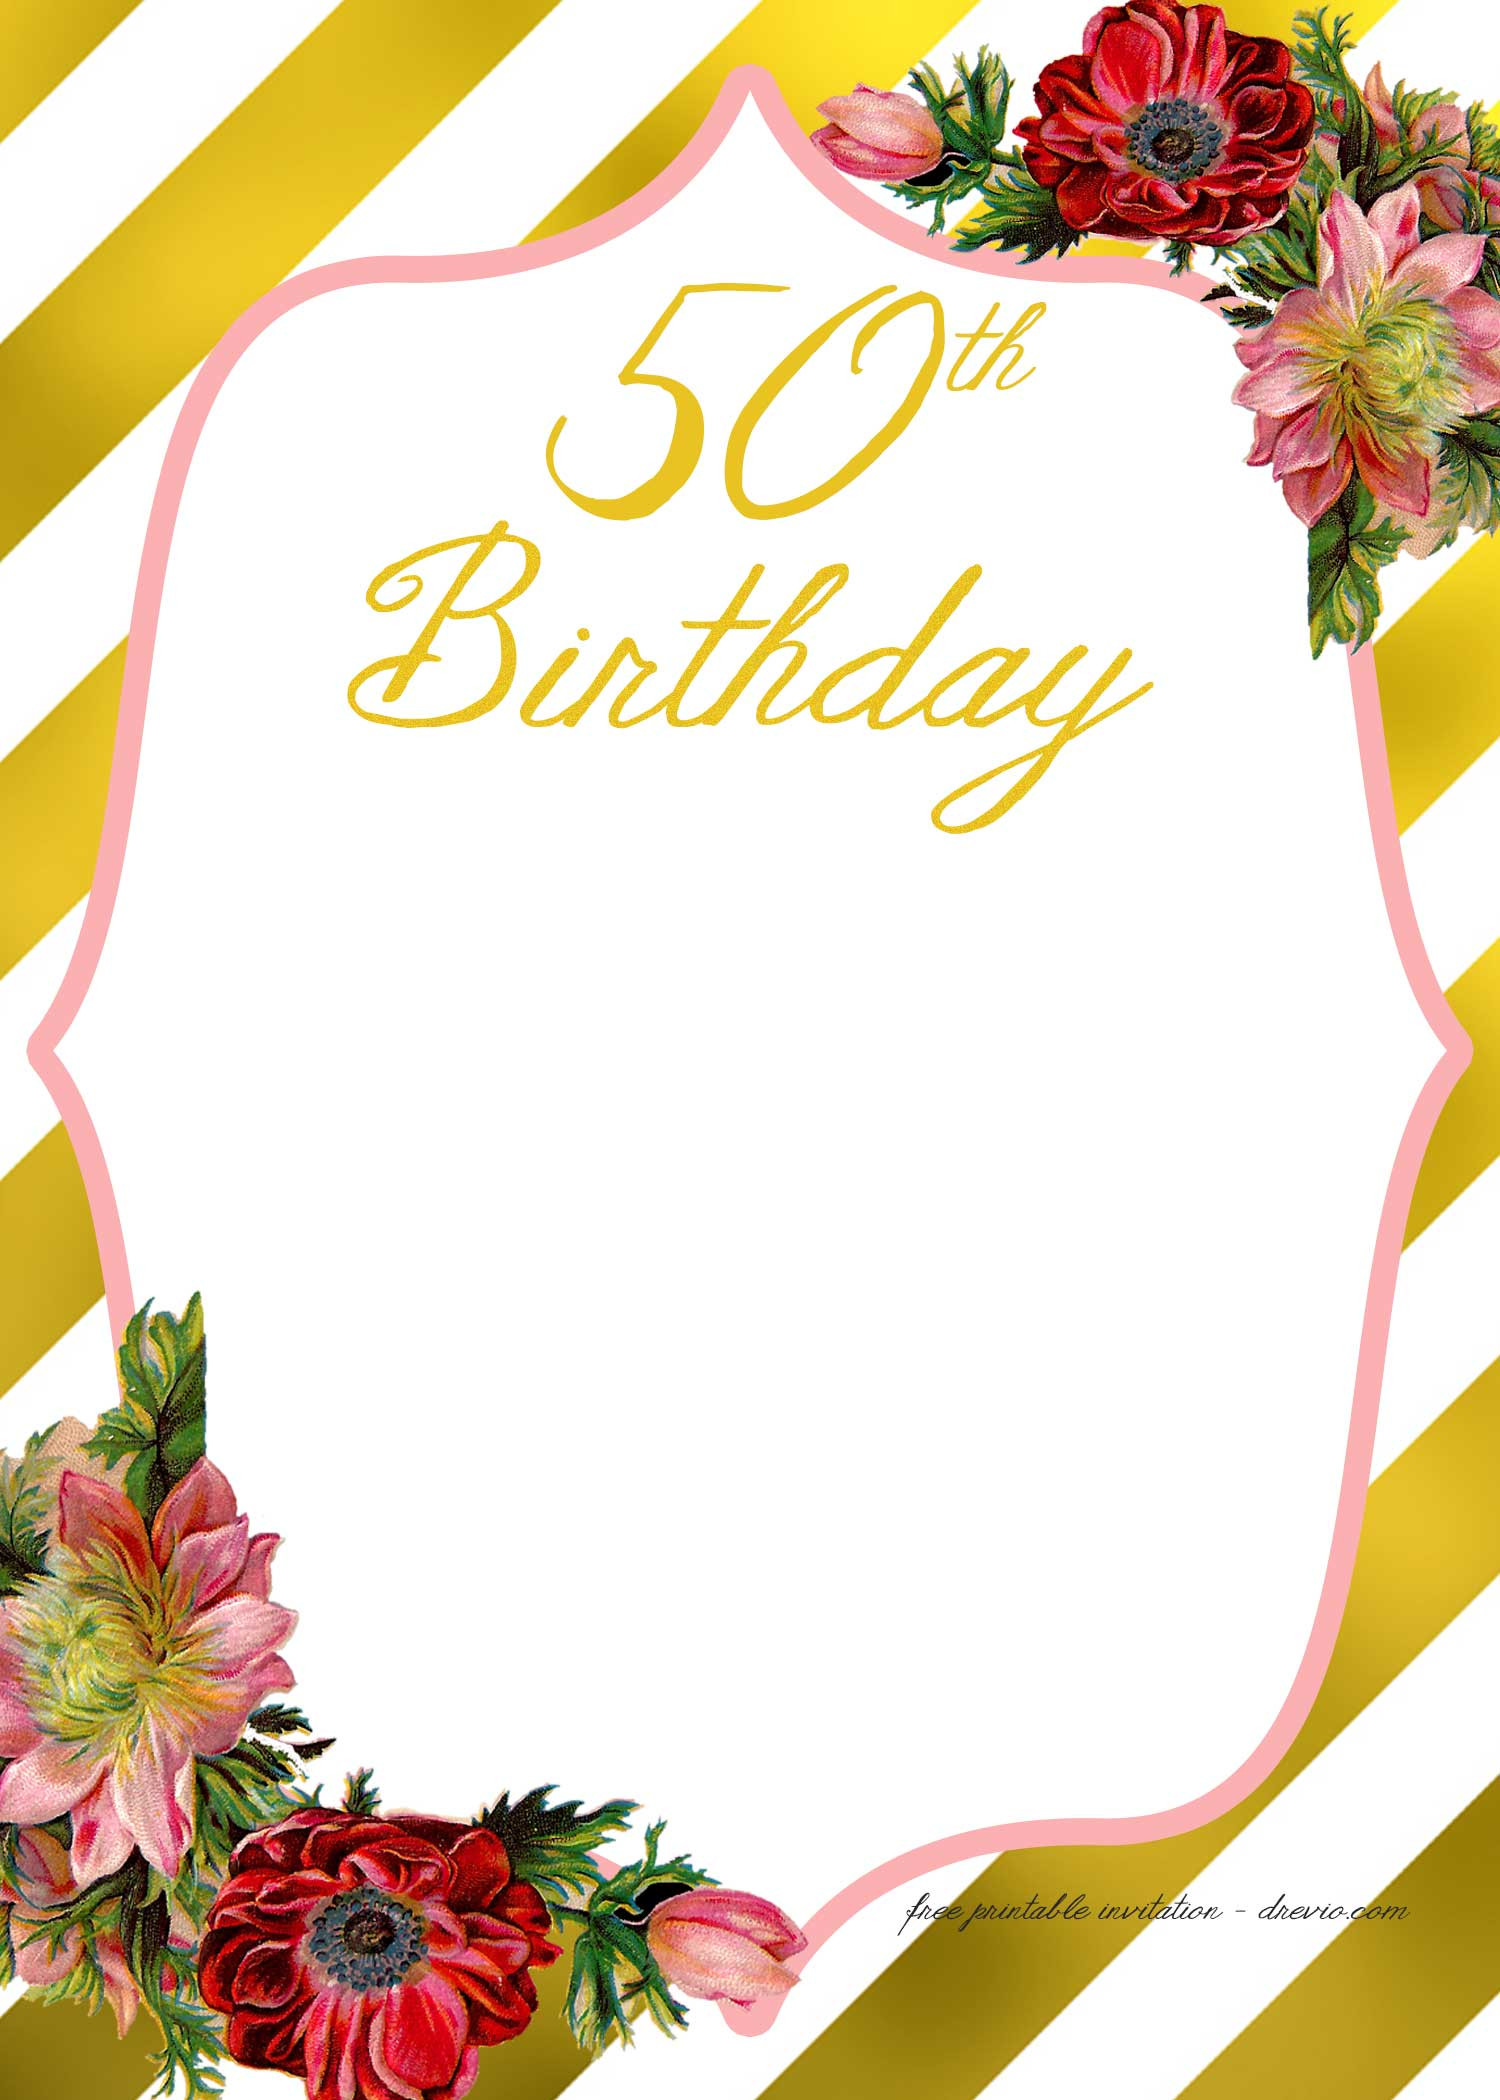 Free Evite Birthday Invitations
 FREE Printable Adult Birthday Invitation Template – FREE